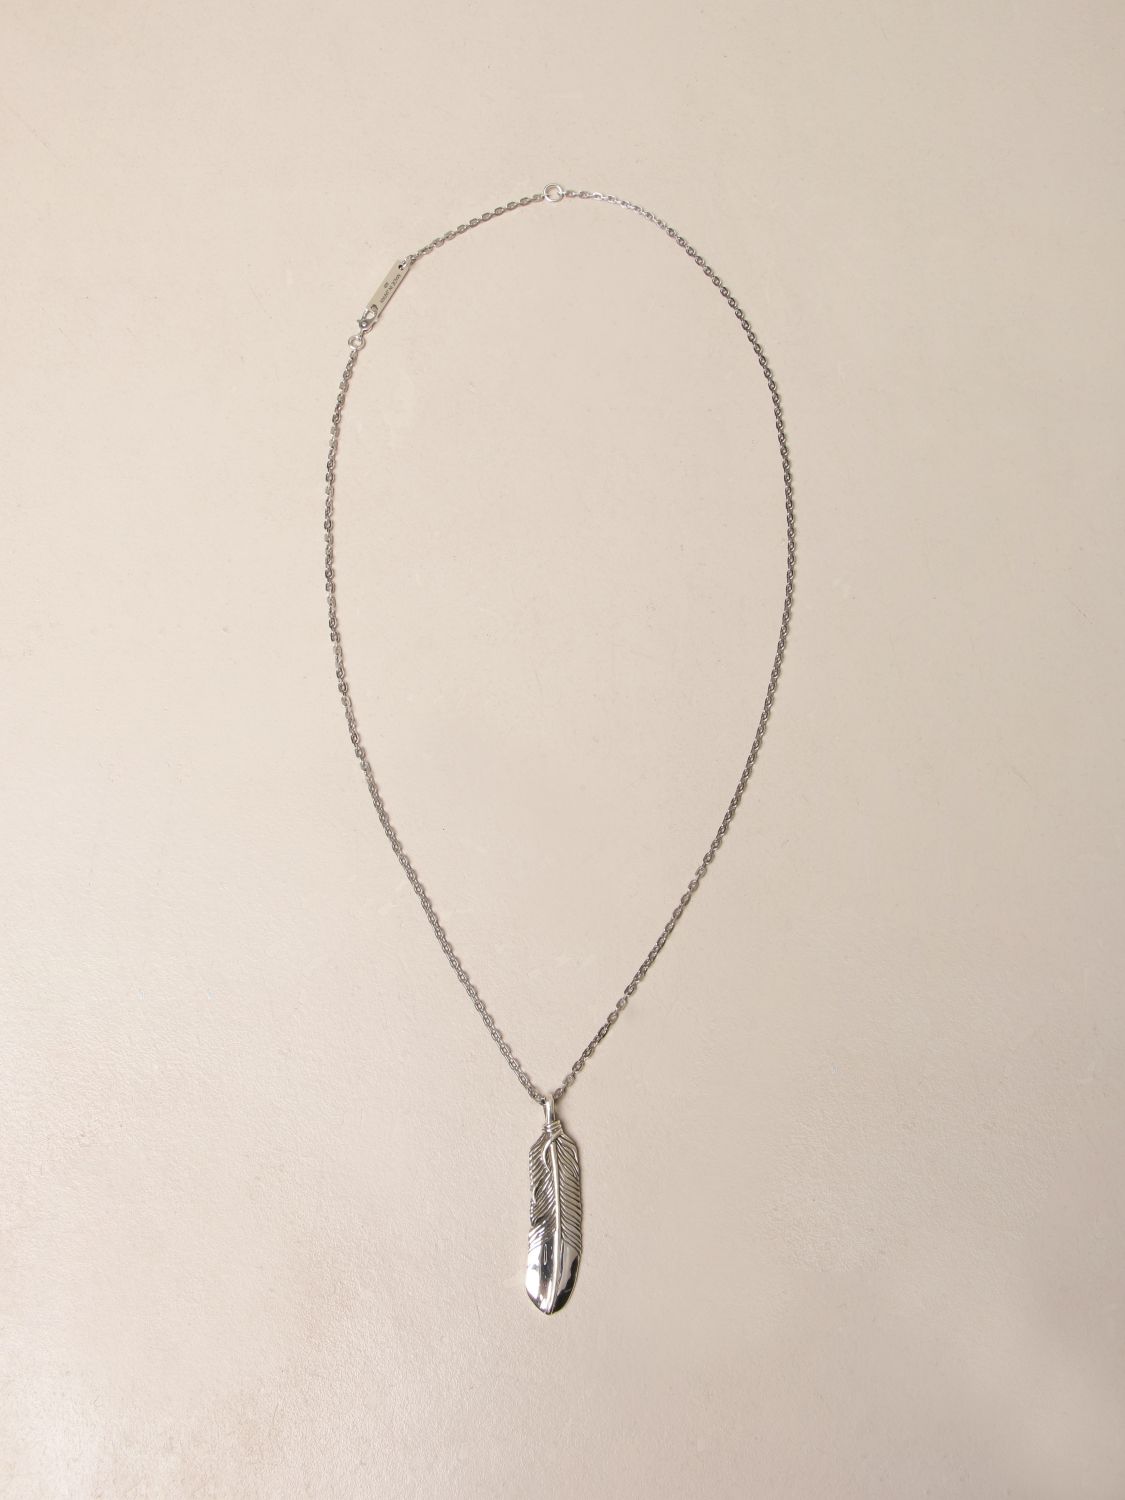 Ambush necklace with feather pendant